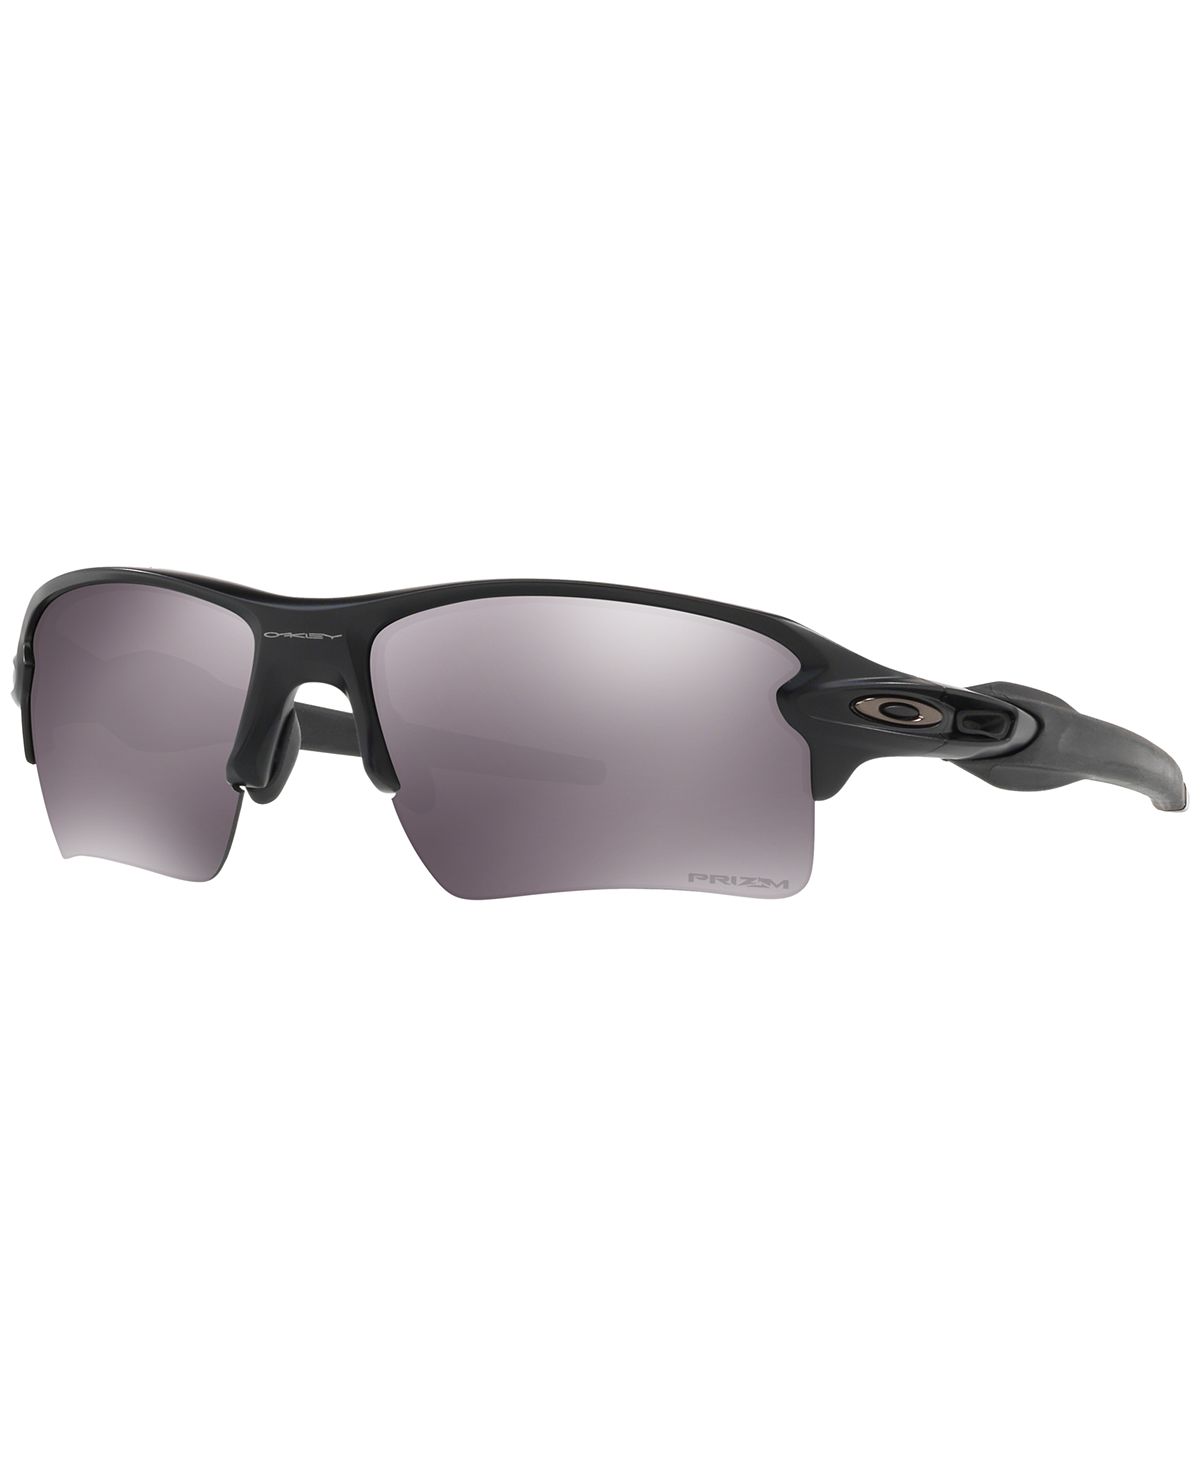 Солнцезащитные очки FLAK 2 XL OO9188 Oakley pfi 303mbk matte black 330 мл 2957b001